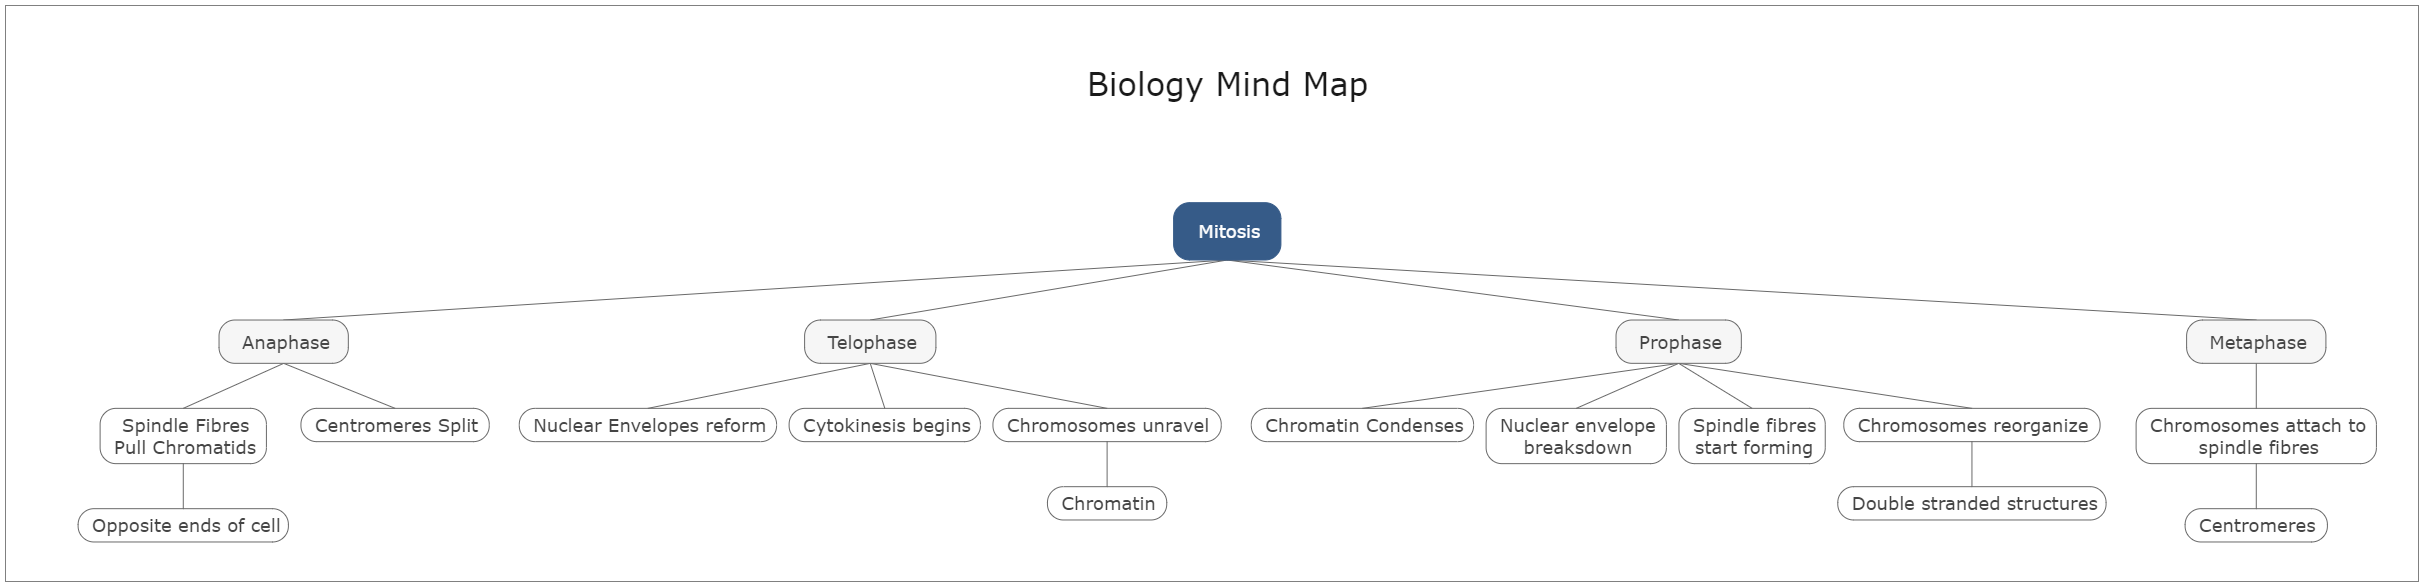 Biology Mind Map Template